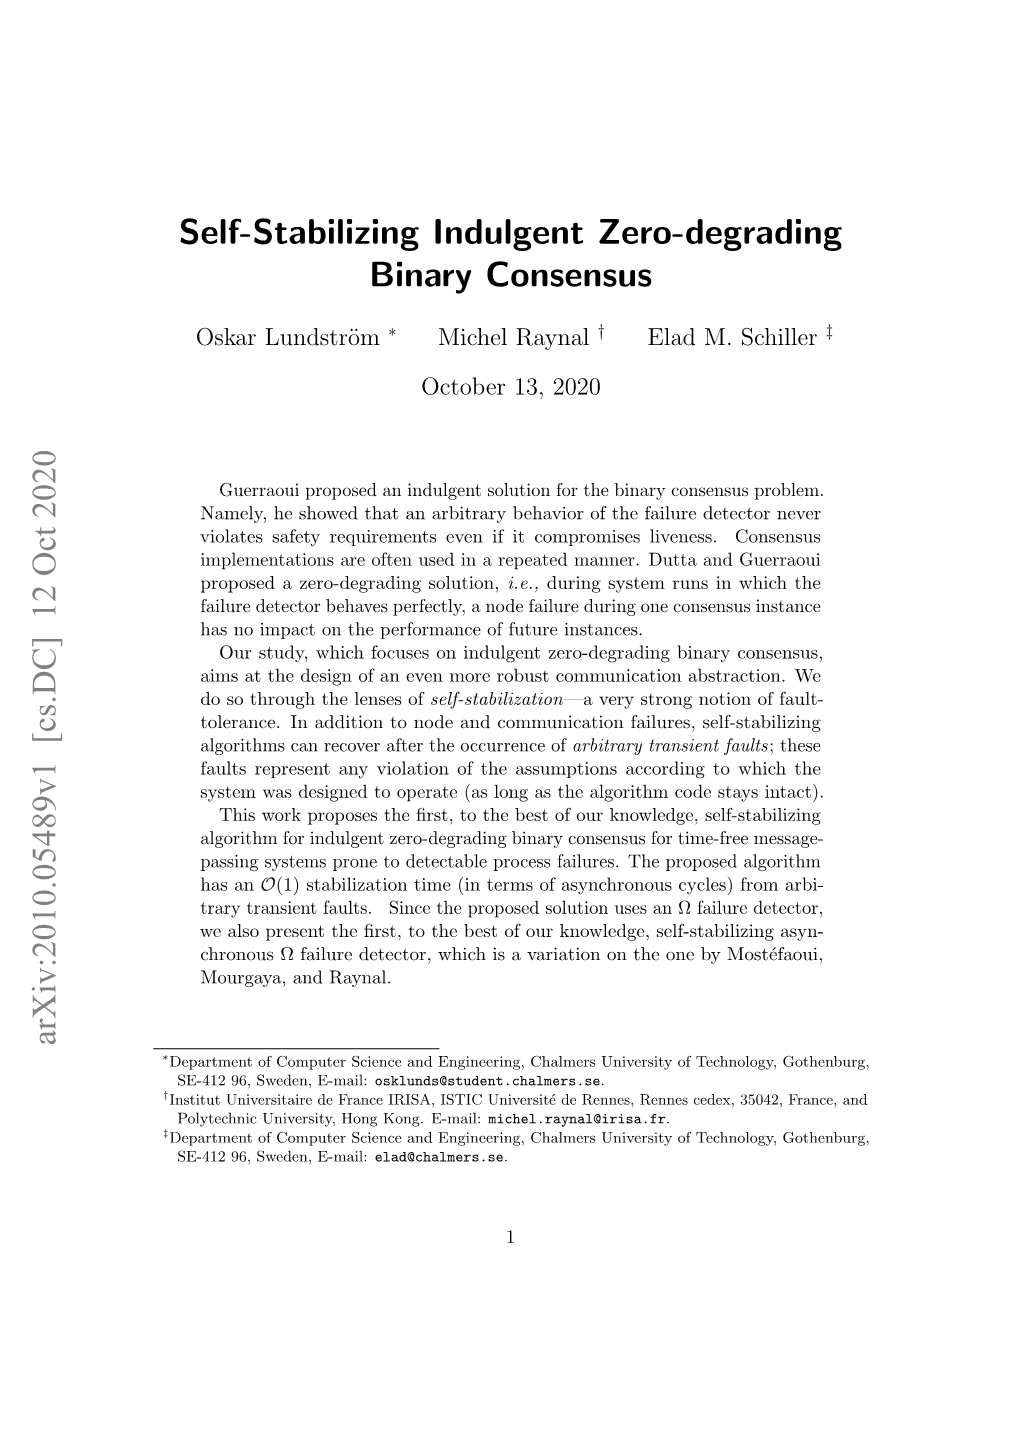 Self-Stabilizing Indulgent Zero-Degrading Binary Consensus Arxiv:2010.05489V1 [Cs.DC] 12 Oct 2020